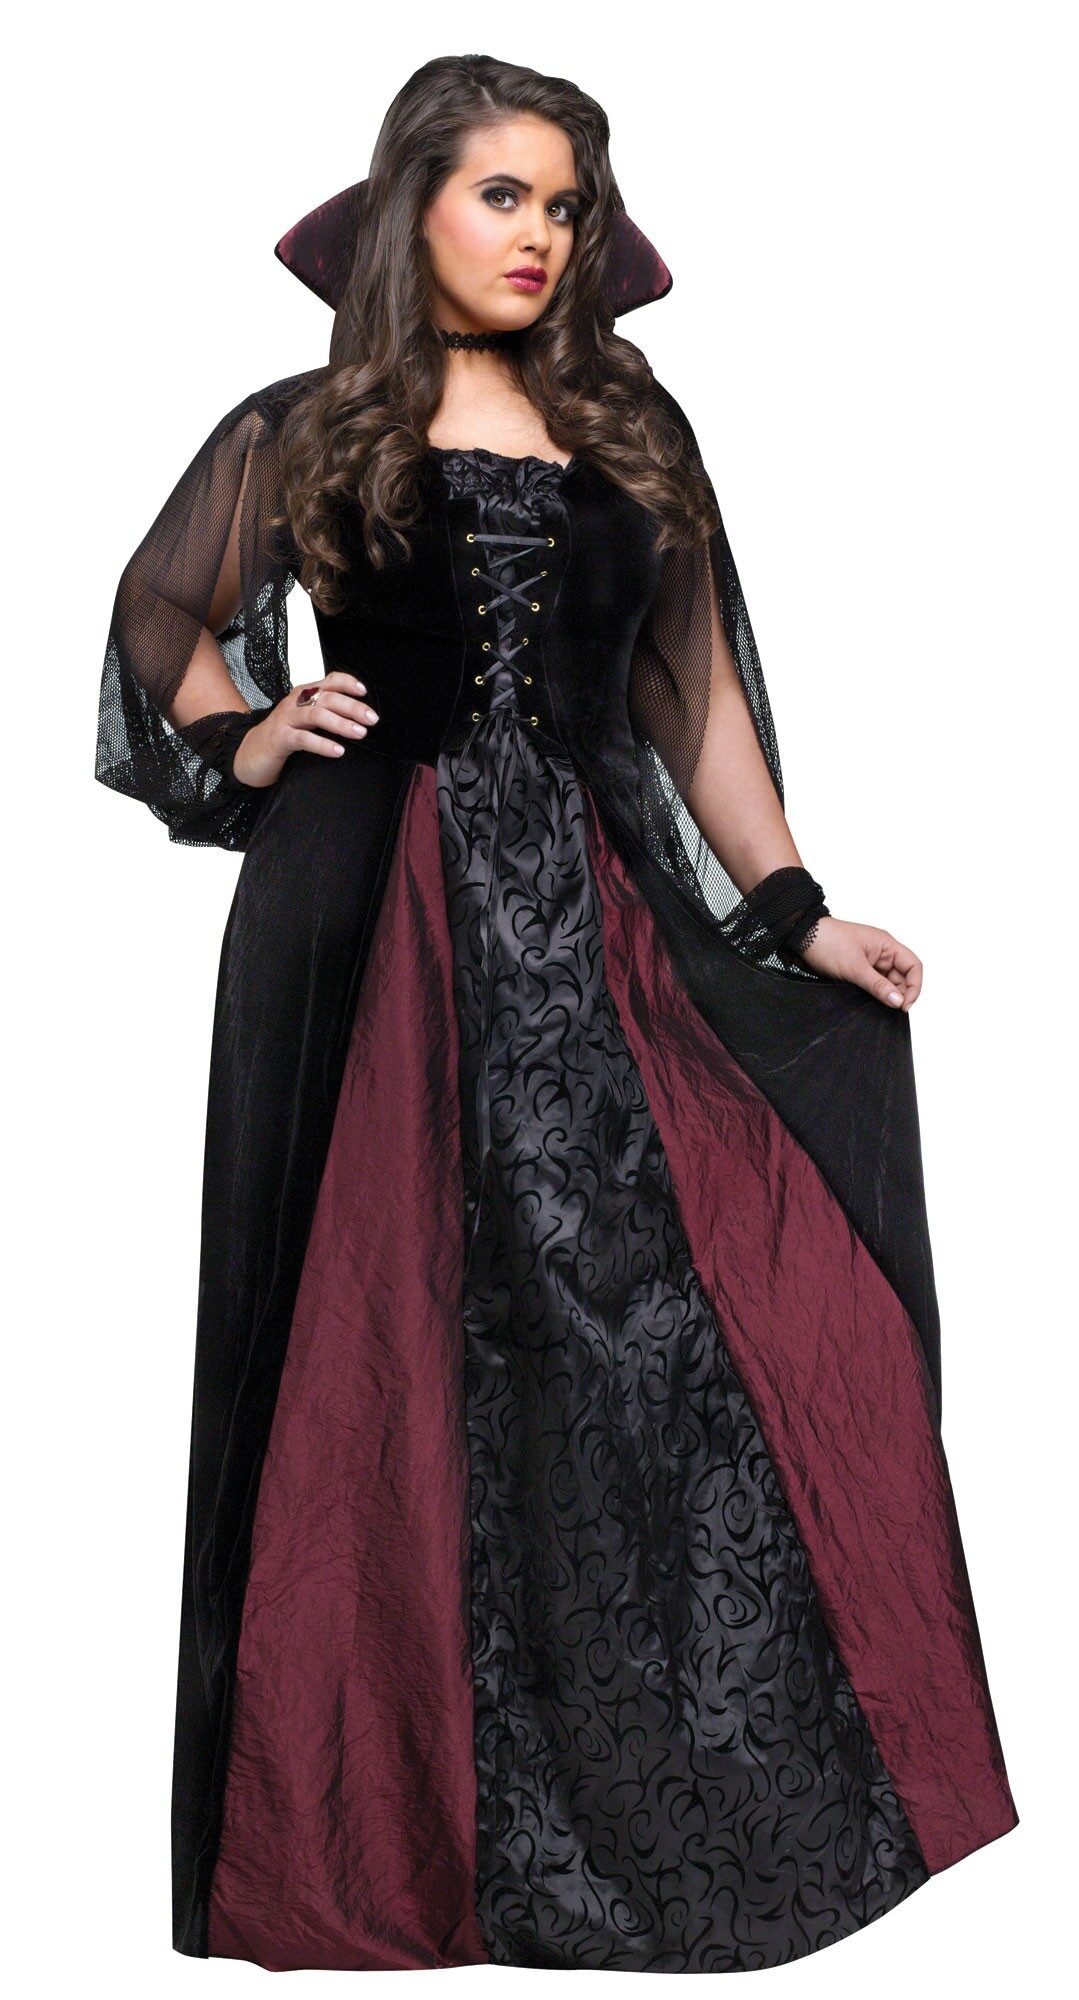 Gothic Girl Plus Size Costume 